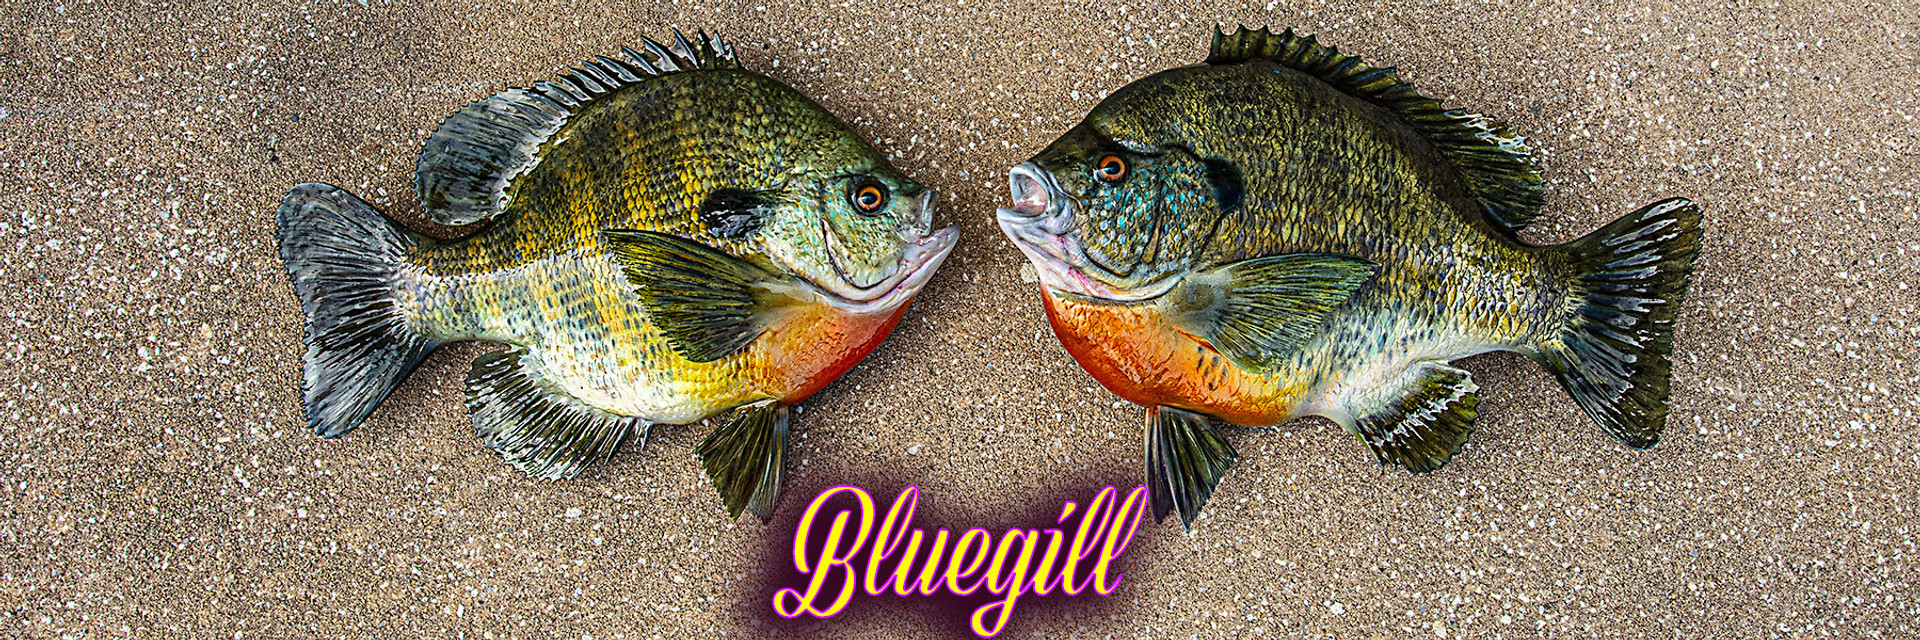 Bluefish 29 inch Full Mount Fiberglass Fish Replica - The Fish